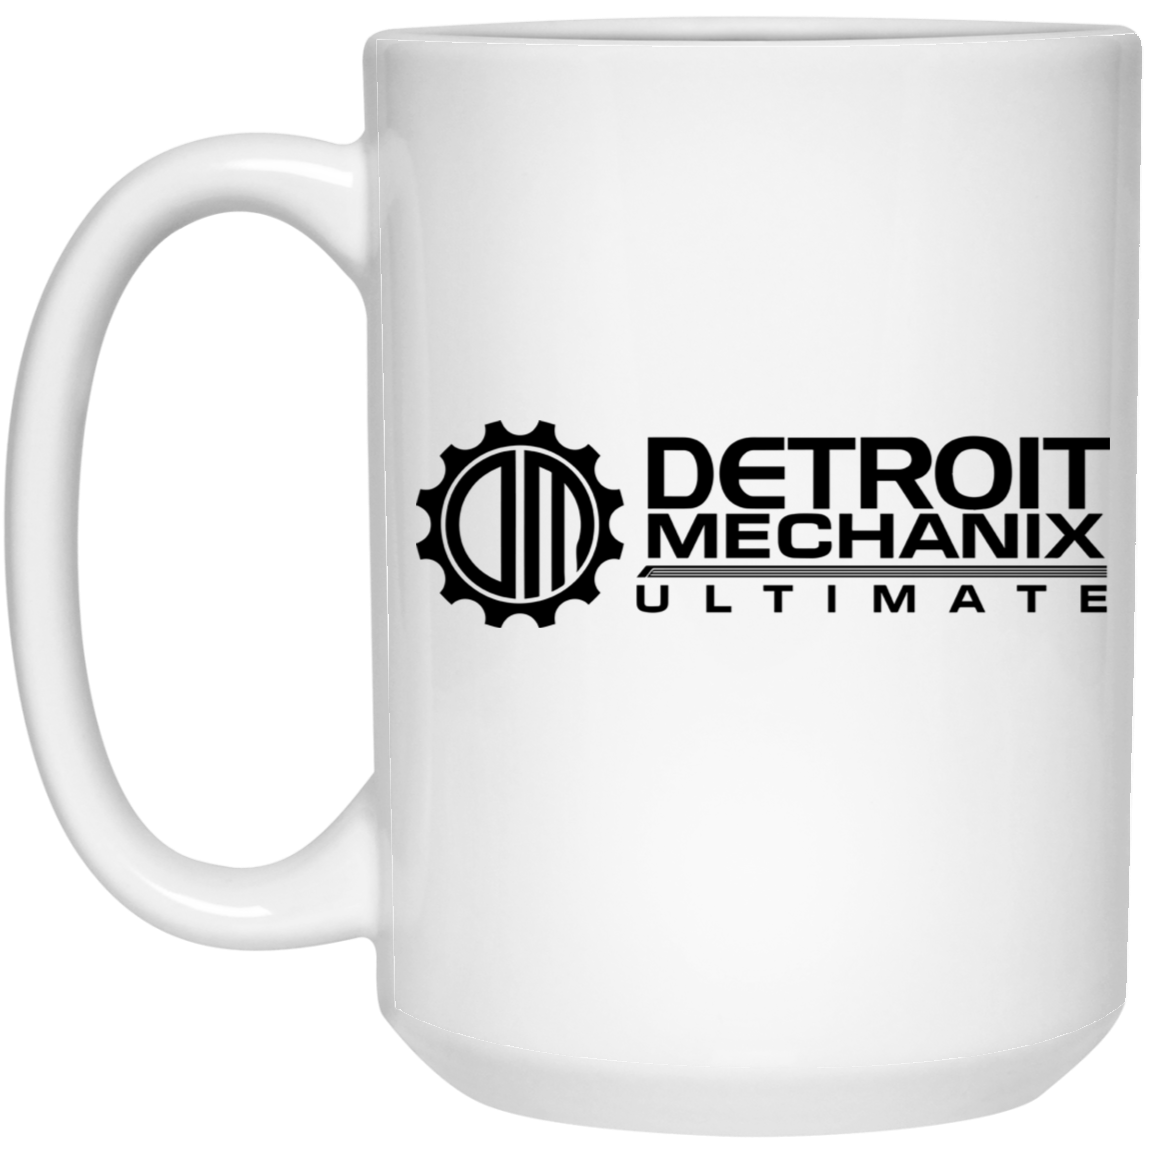 Detroit Mechanix Ultimate